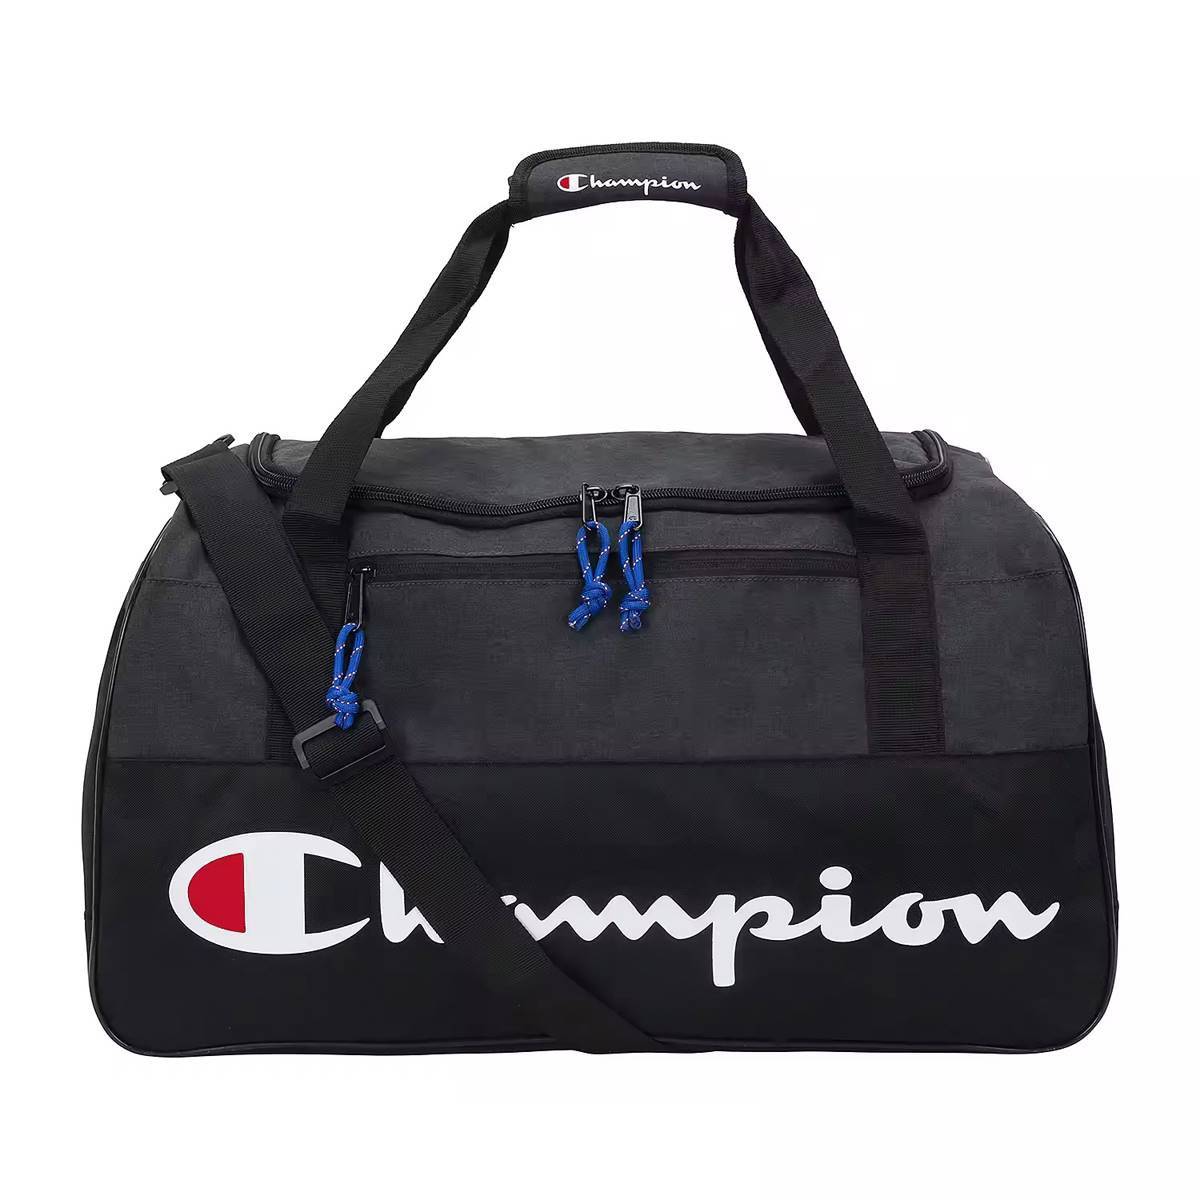 Champion Utility Medium Duffel Bag